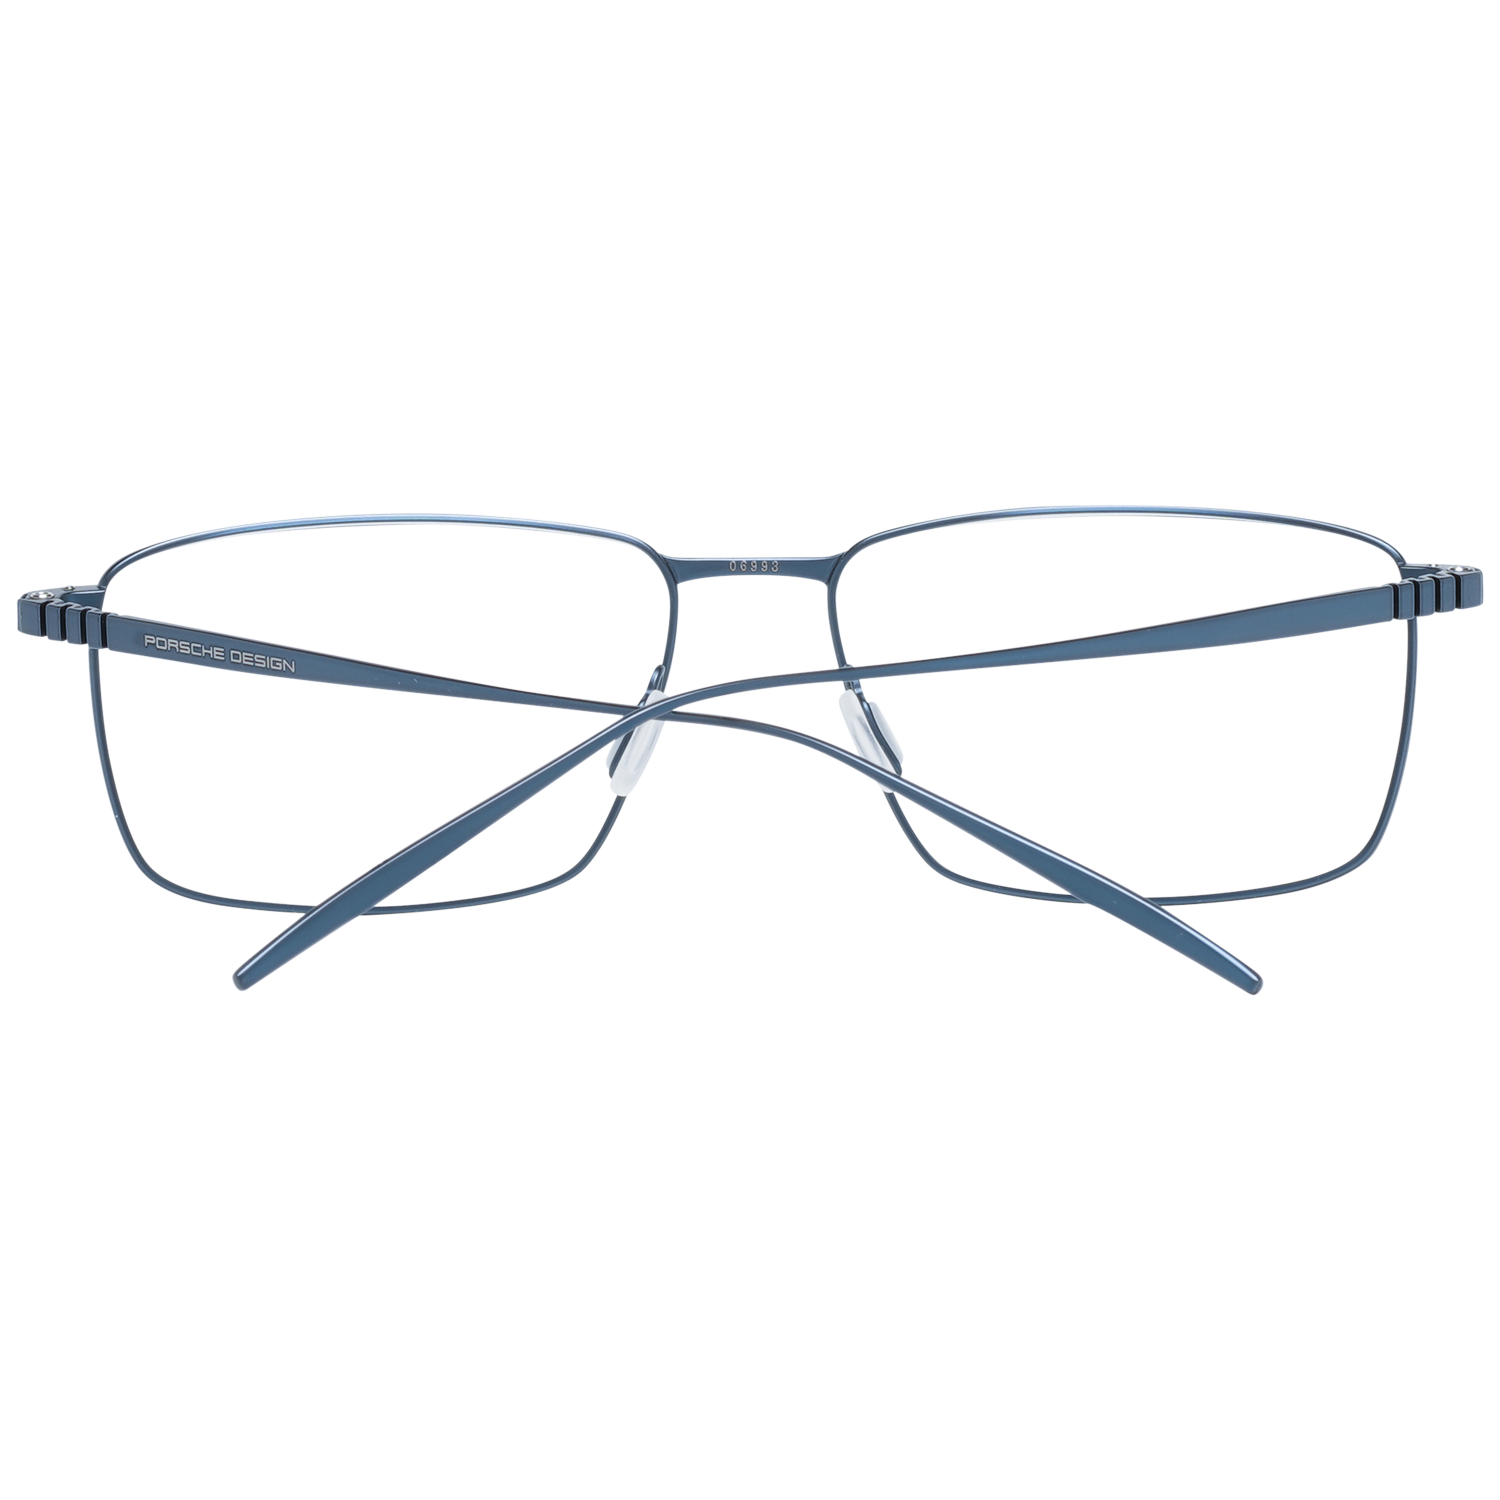 Porsche Design Men's Glasses Optical Frame Blue Rectangle P8373 D 58 ...